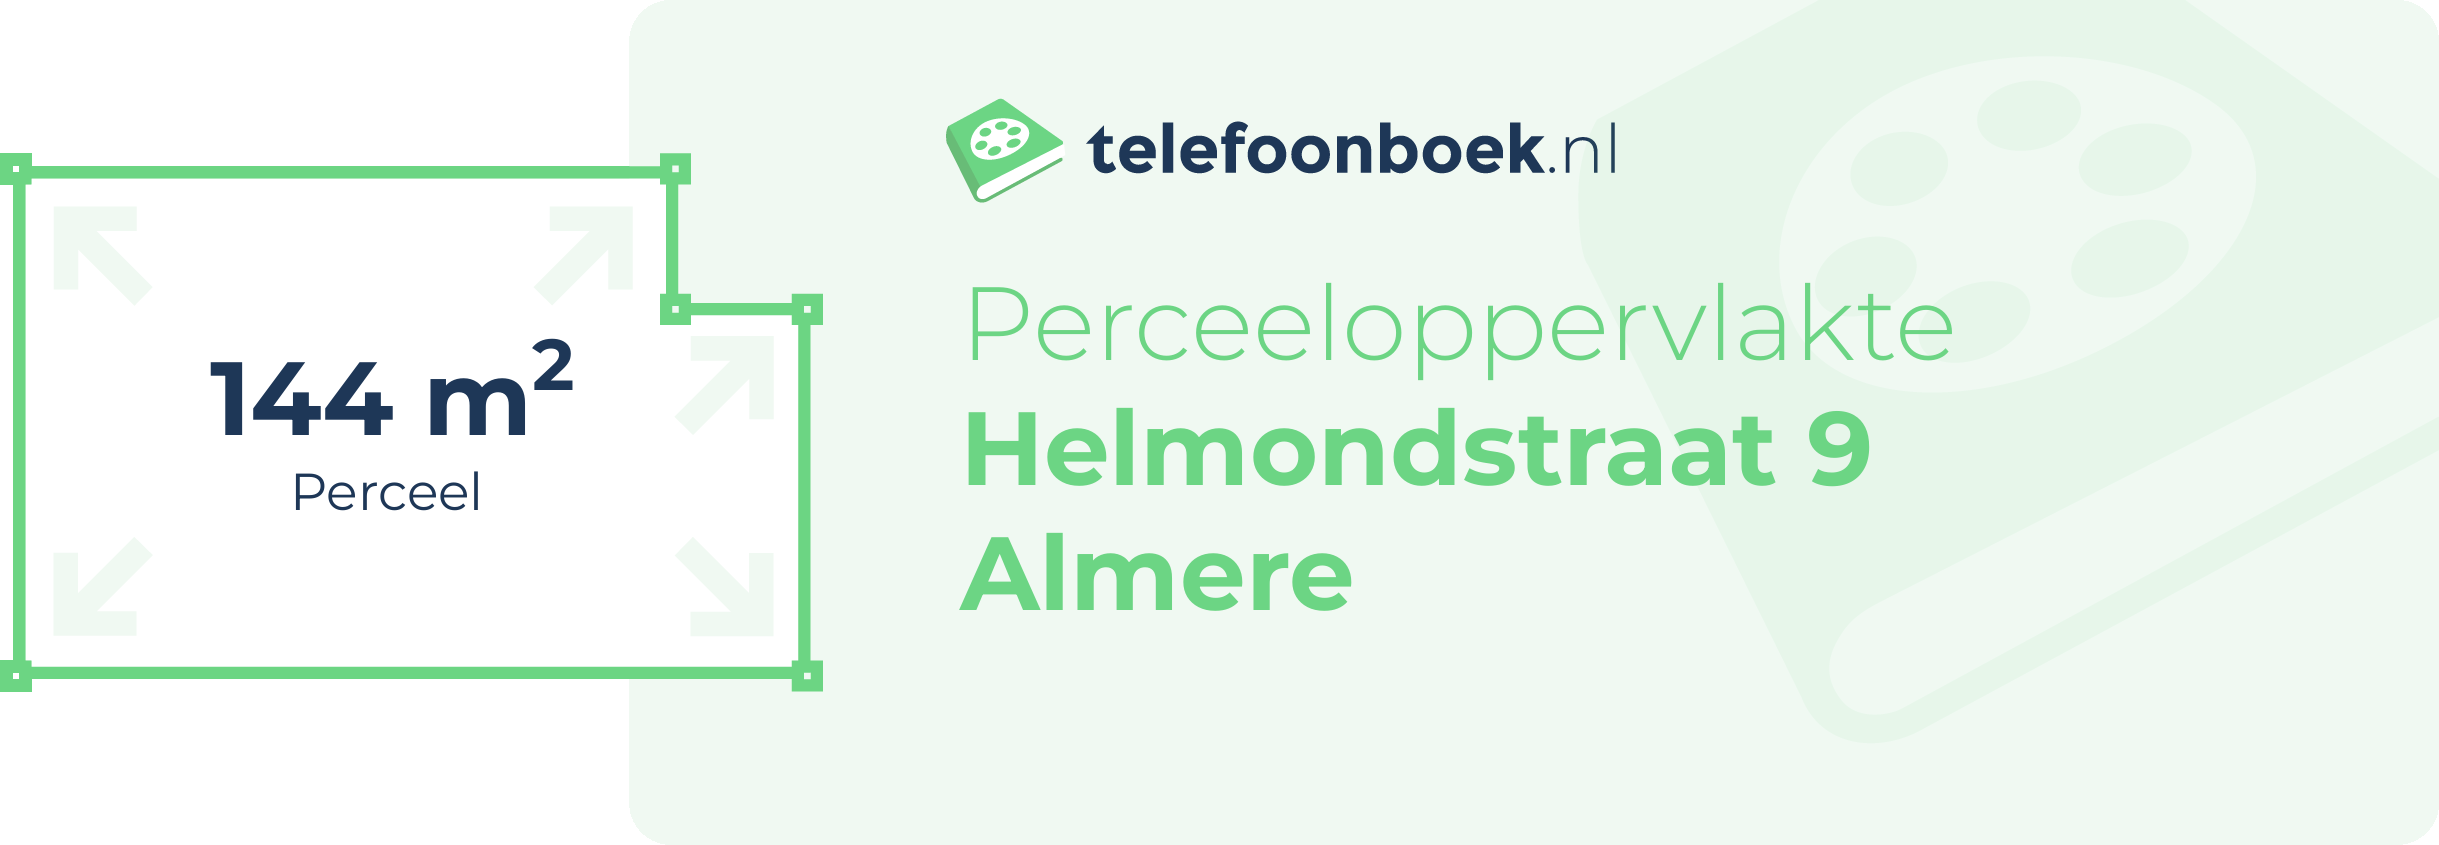 Perceeloppervlakte Helmondstraat 9 Almere